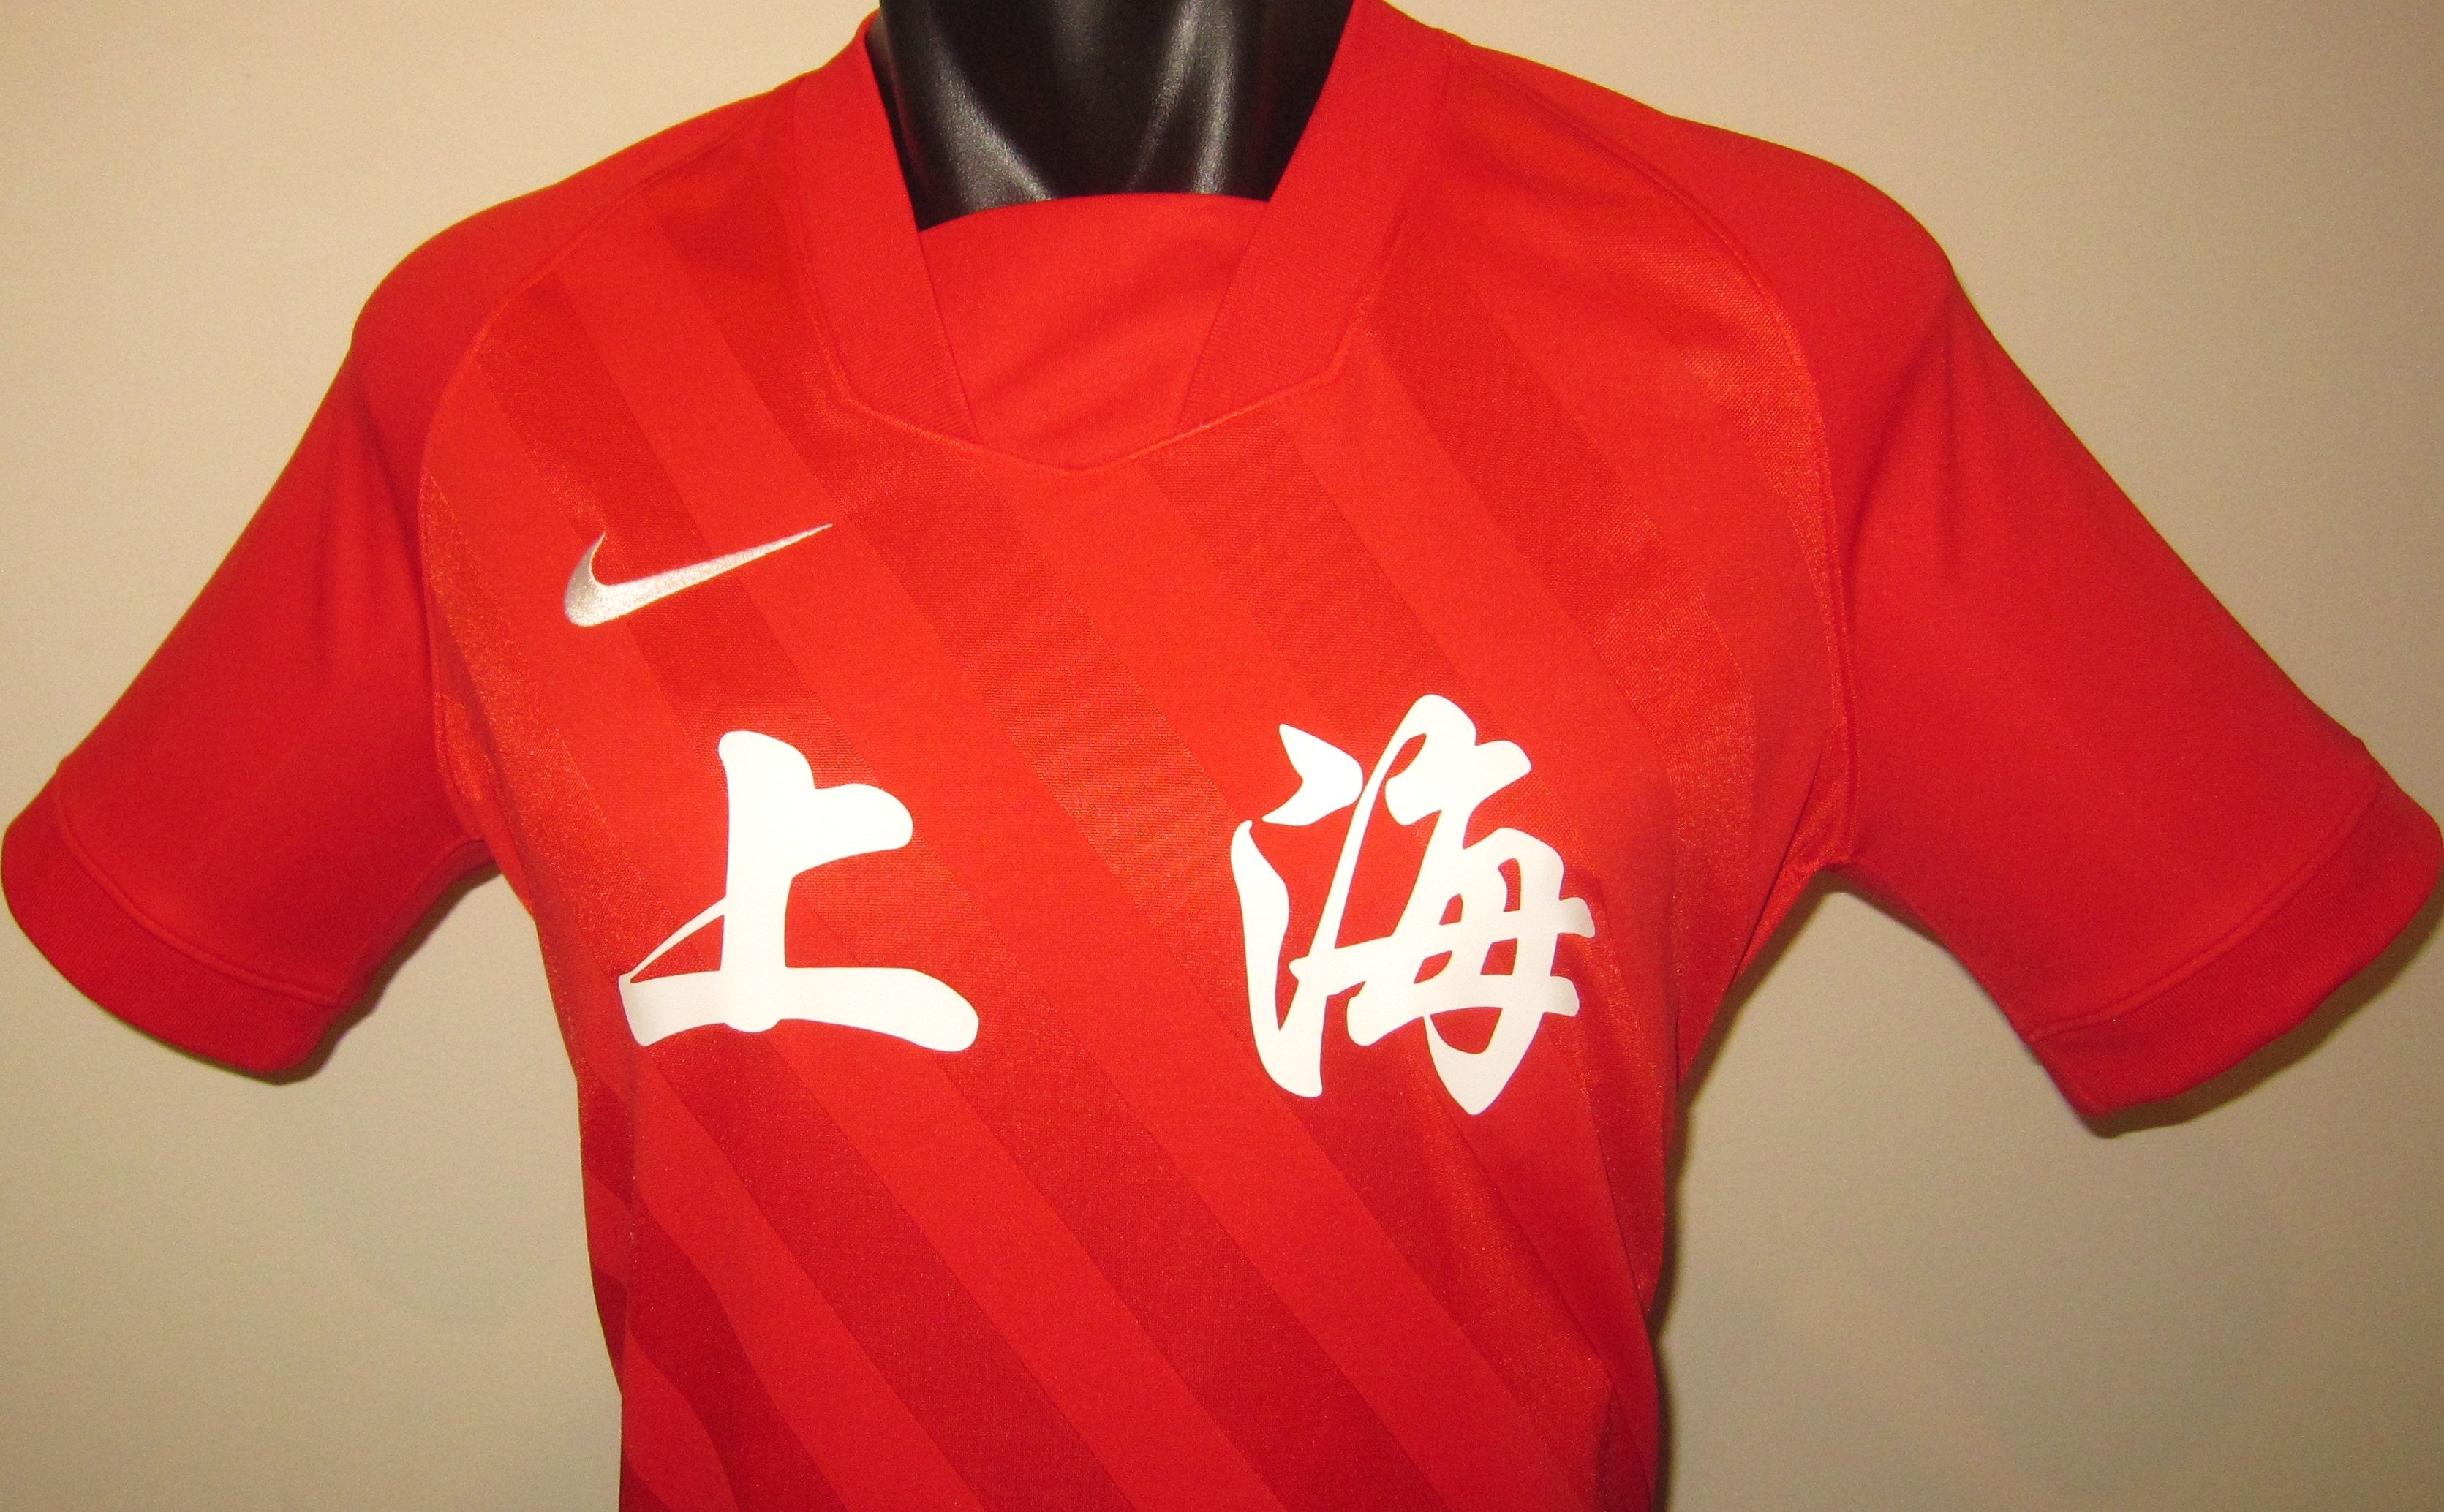 Shanghai 2021 National Games Home Jersey/Shirt